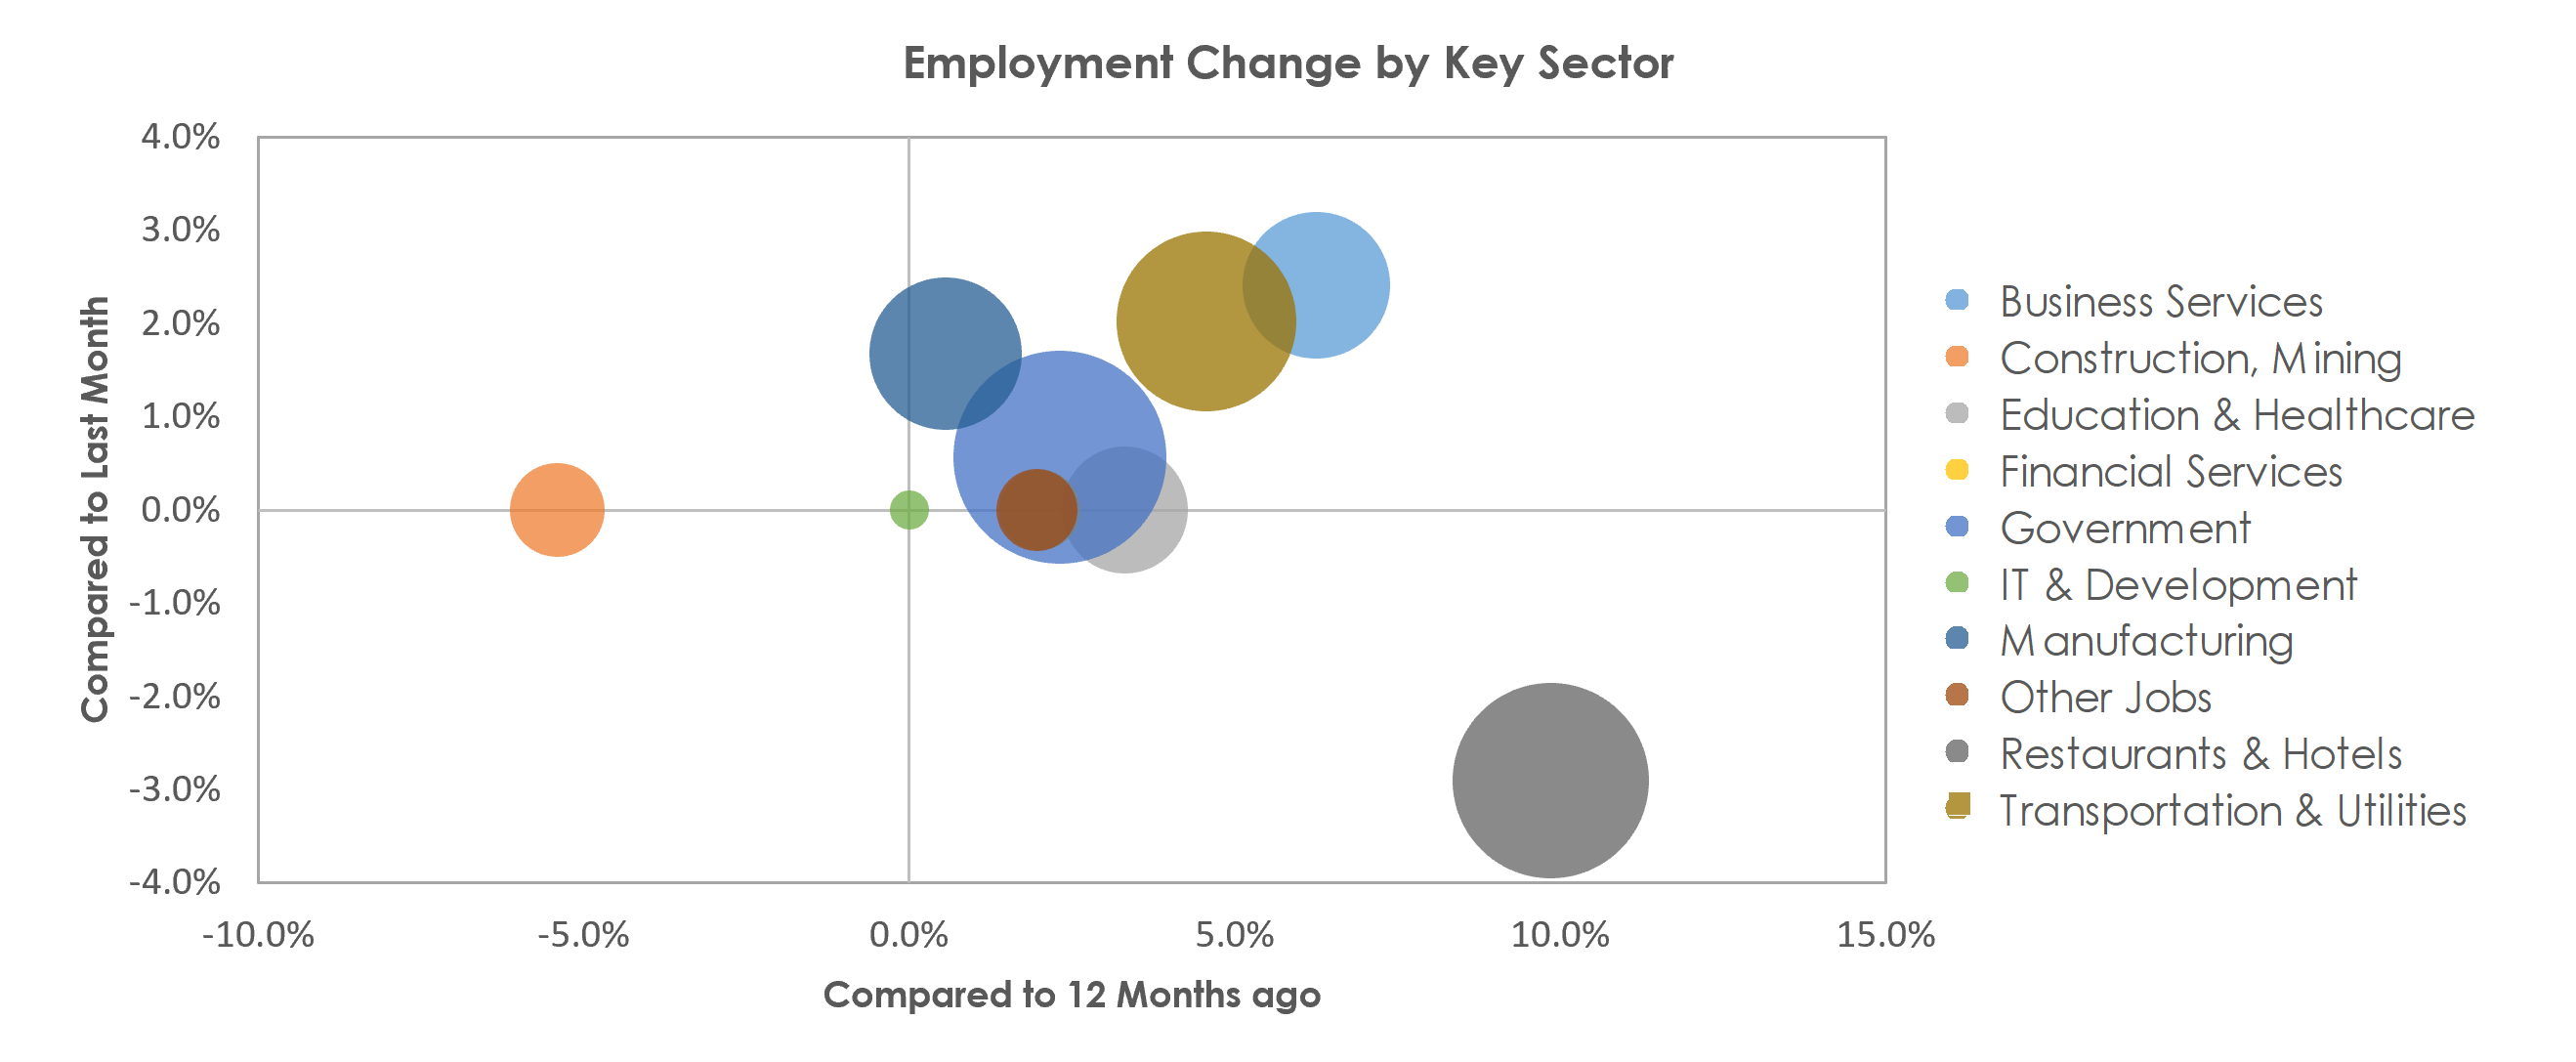 Gulfport-Biloxi-Pascagoula, MS Unemployment by Industry September 2021